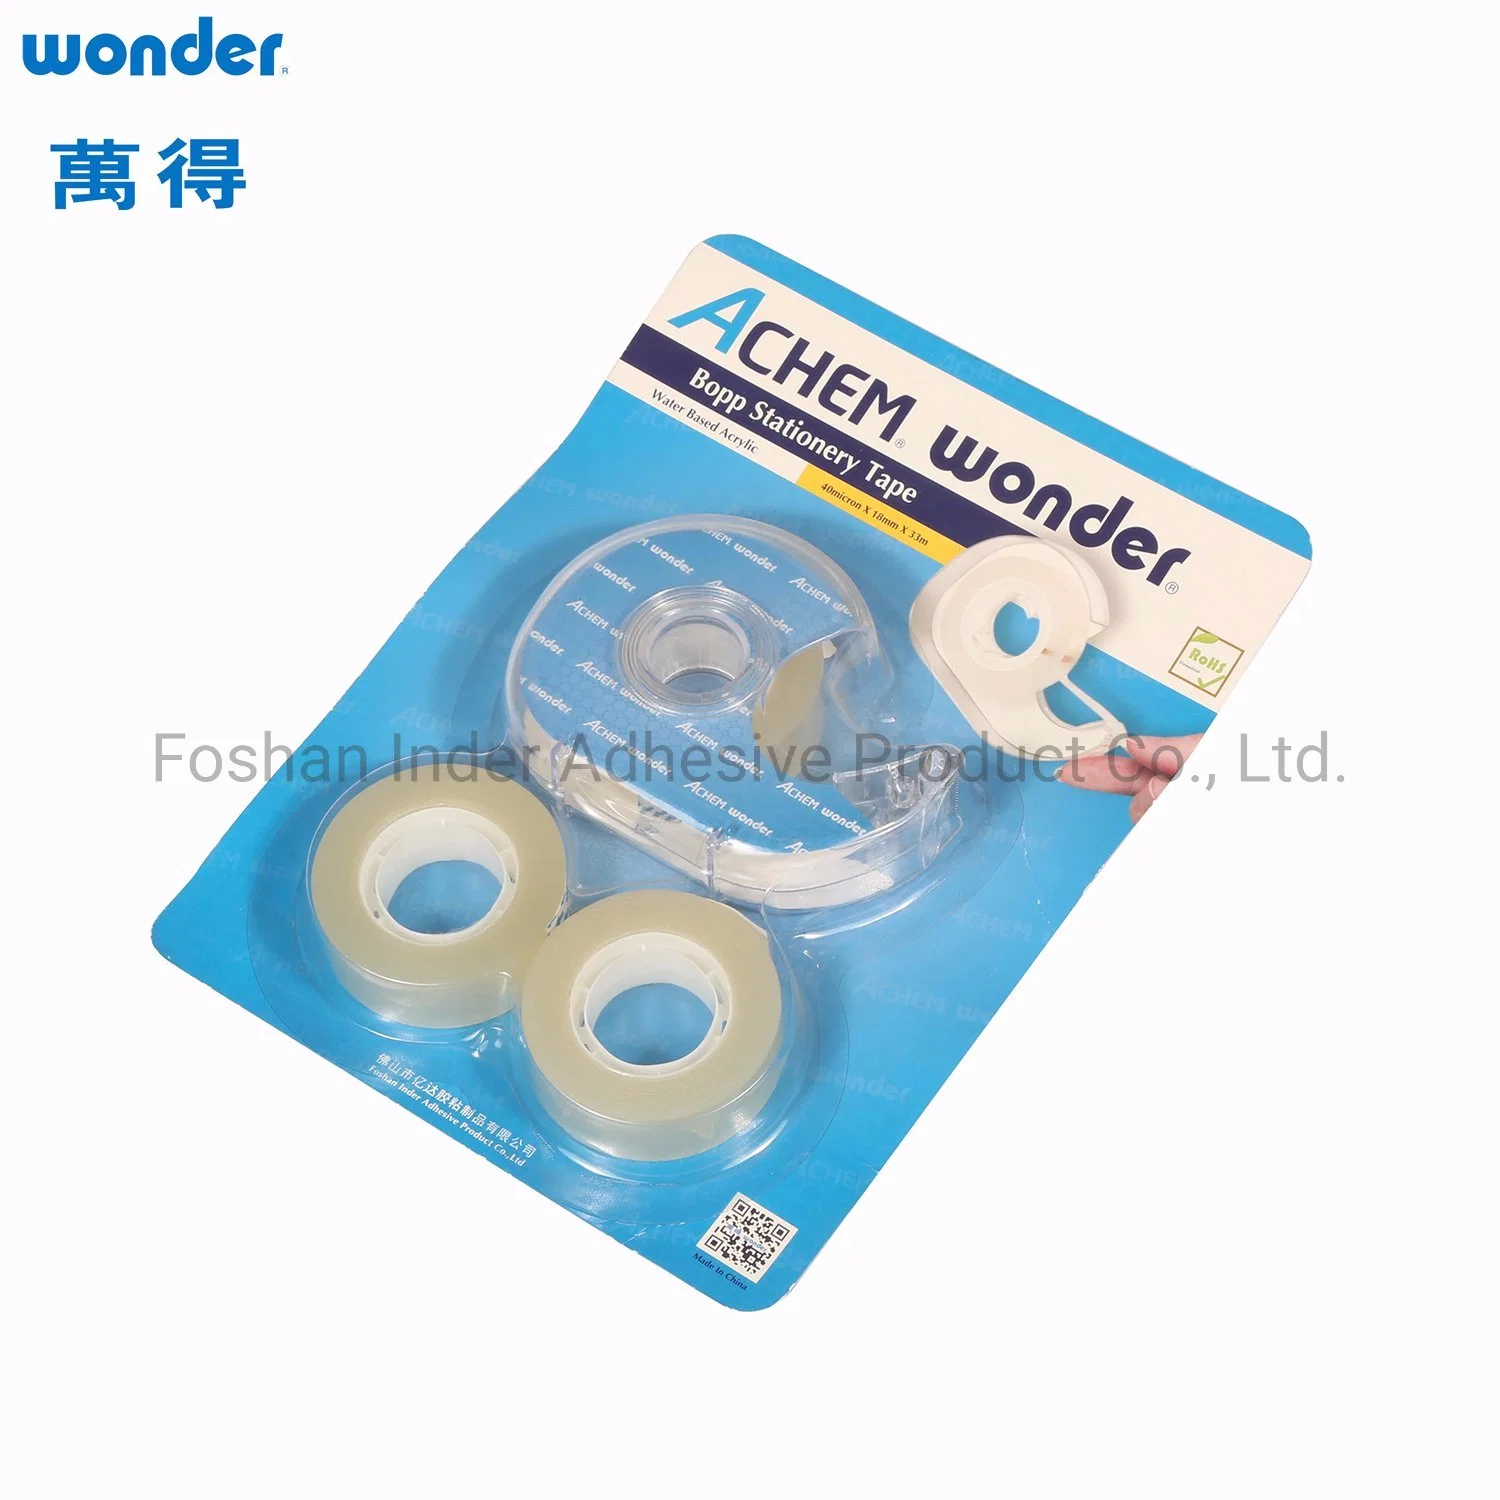 Wonder Brand Hot Saling Stationery Tape / Tape Dispenser/Cutter for Office